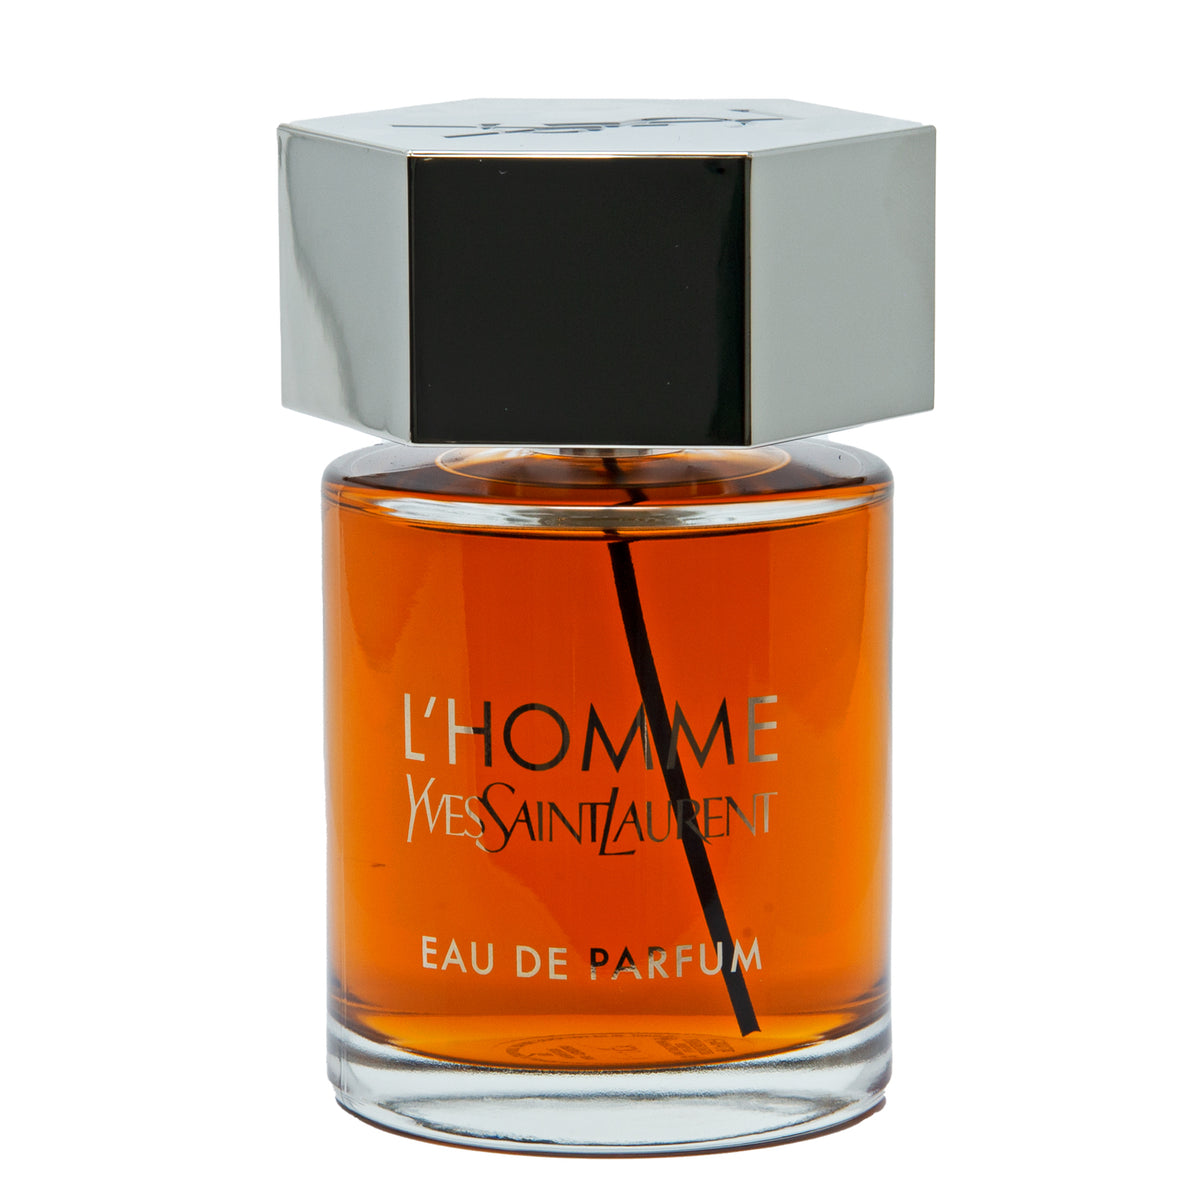 Lhomme by Yves Saint Laurent Fragrance Samples | DecantX | Scent ...